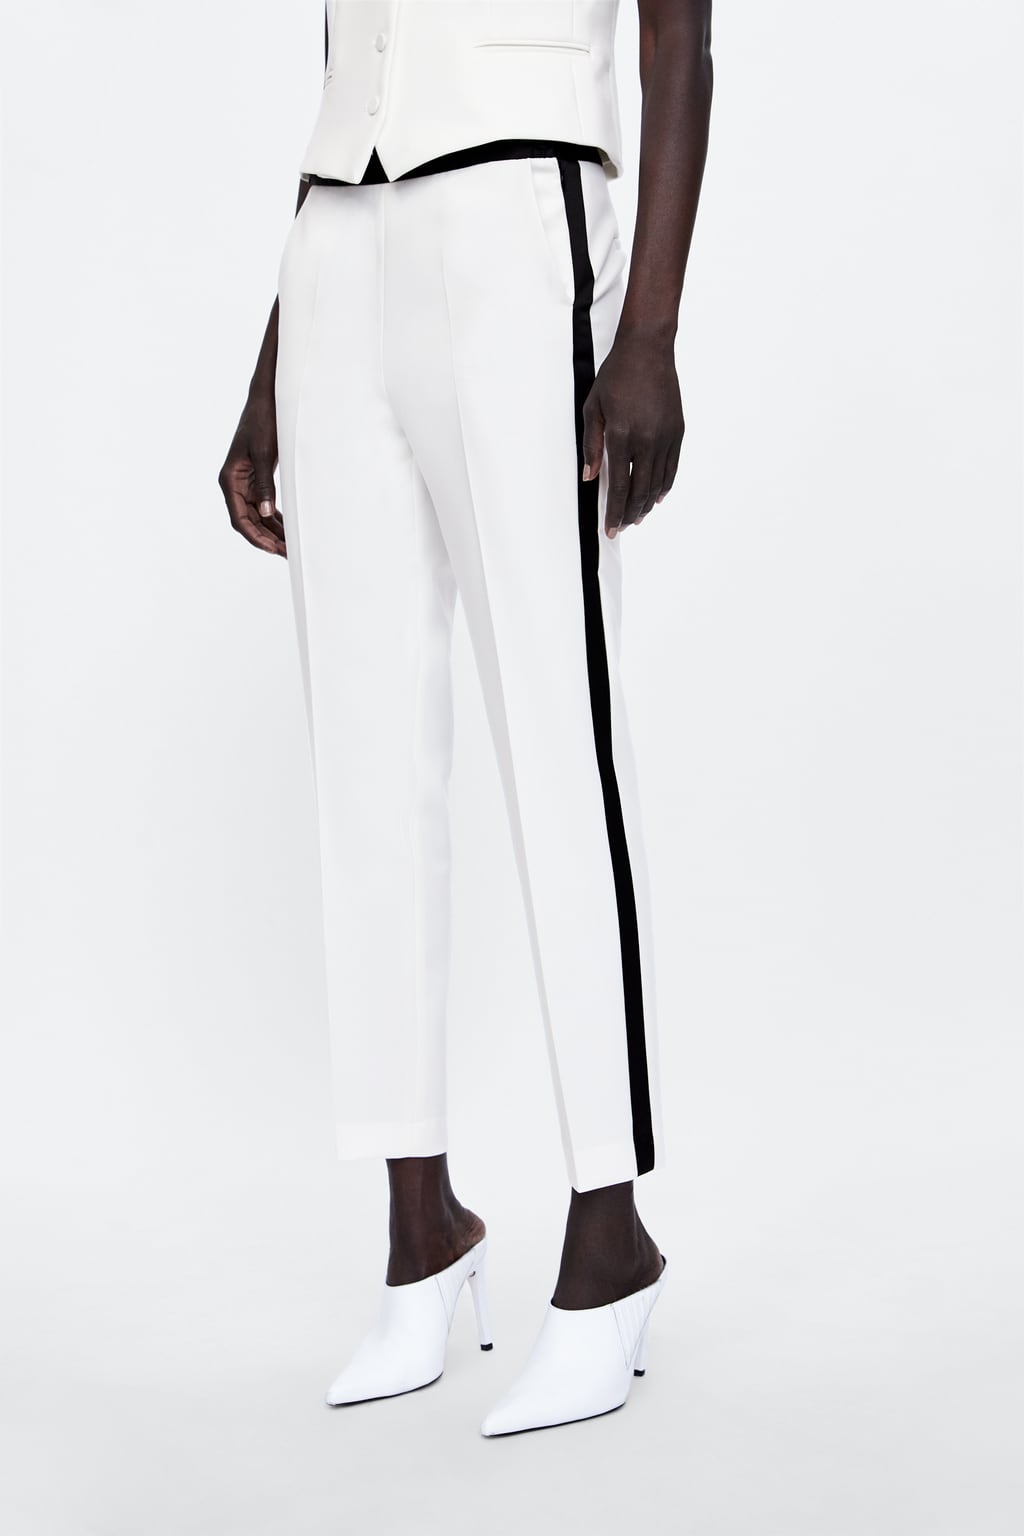 Zara Tuxedo Trousers.jpg